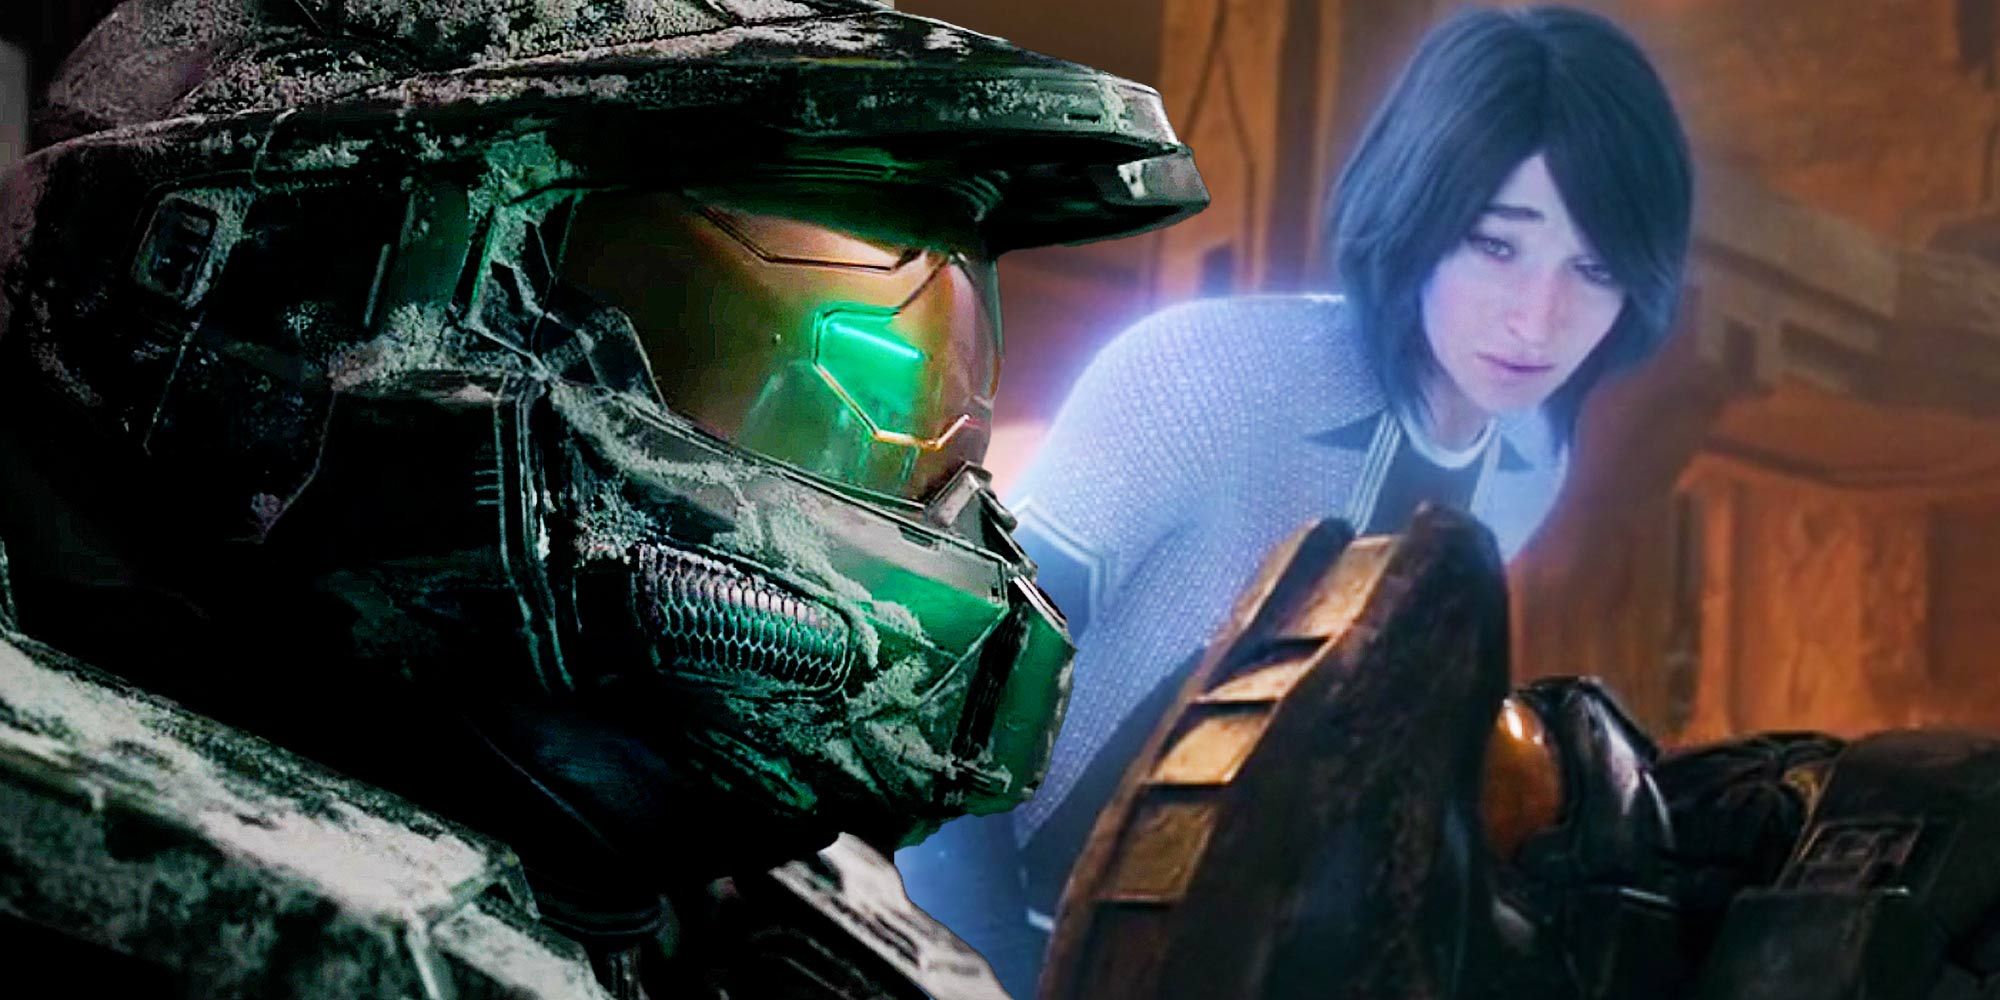 Why 'Halo' unmasks Master Chief, expands Cortana character - Los